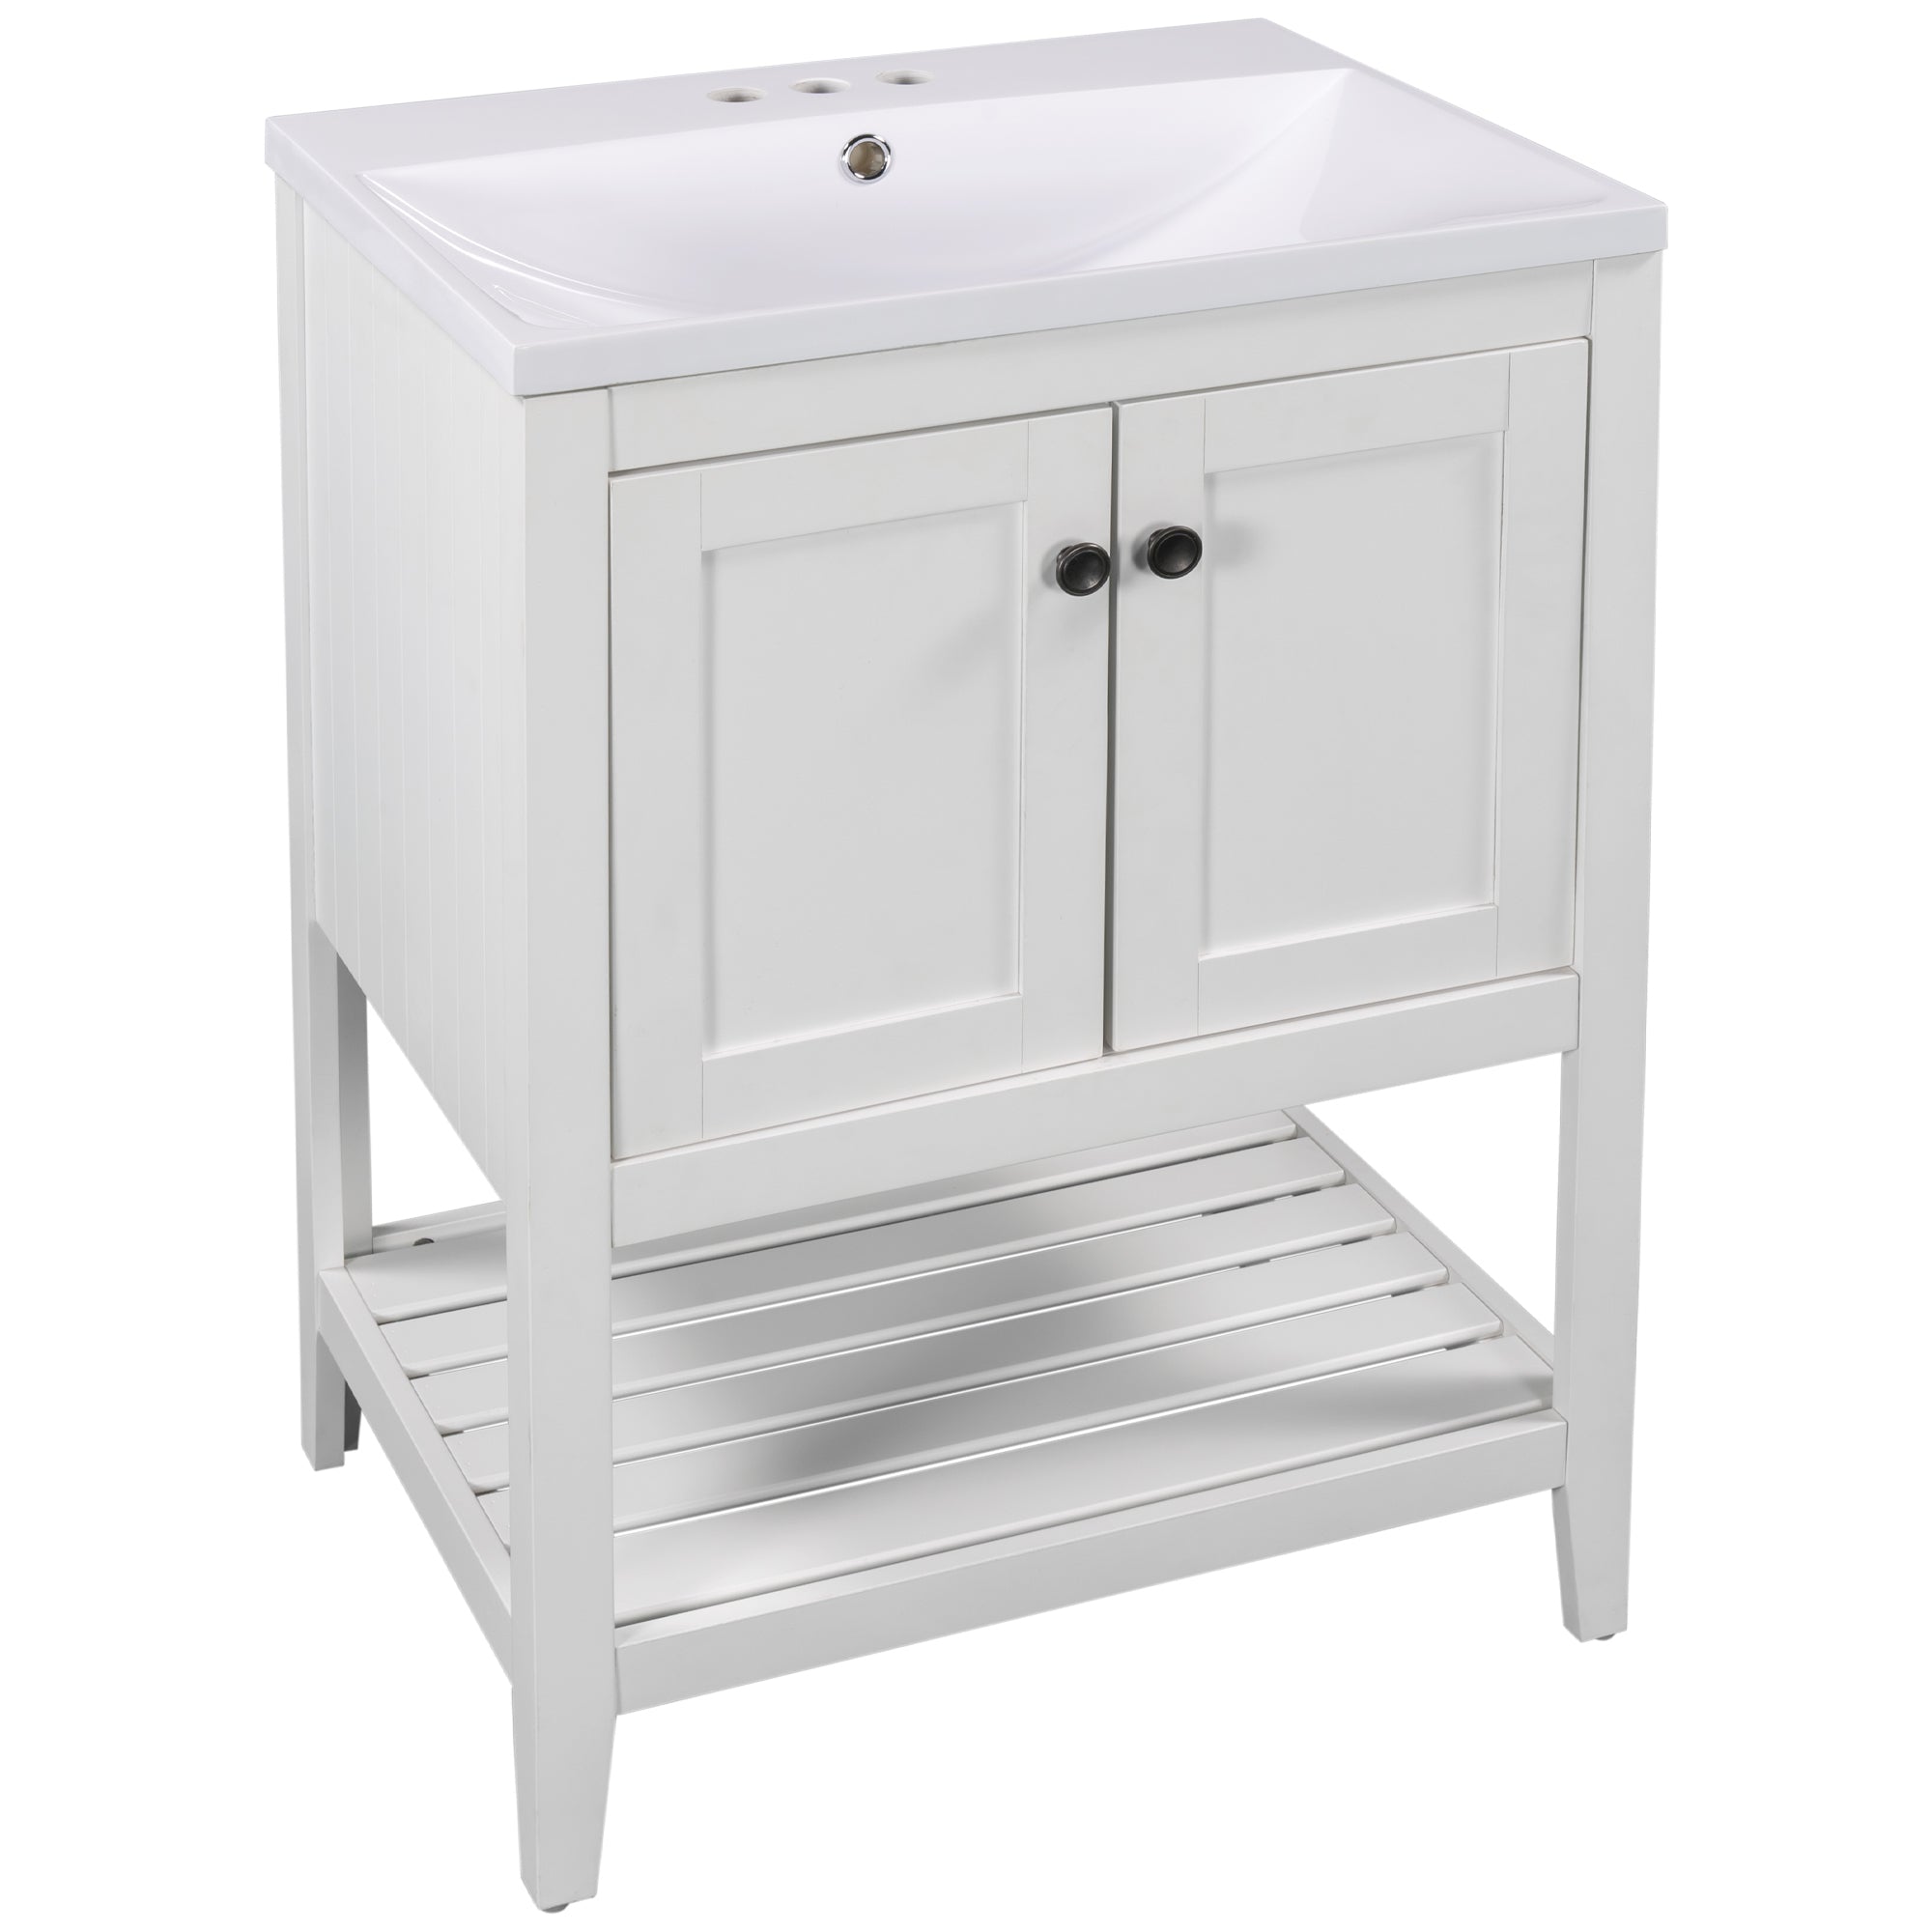 24" White Modern Sleek Bathroom Vanity Elegant Ceramic Sink with Solid Wood Frame Open Style Shelf